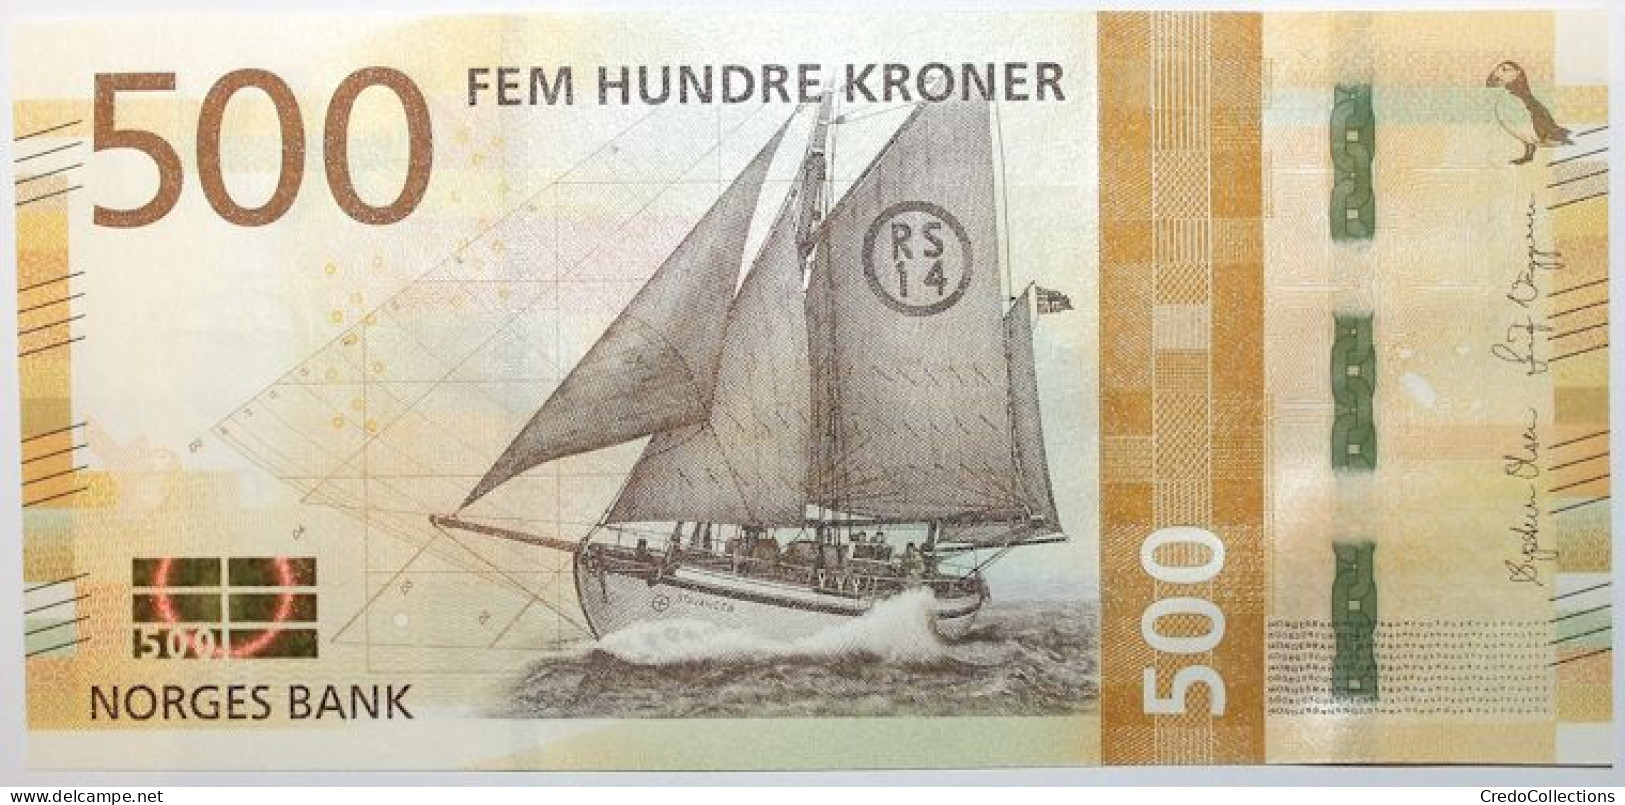 Norvège - 500 Kroner - 2018 - PICK 56a - NEUF - Norway